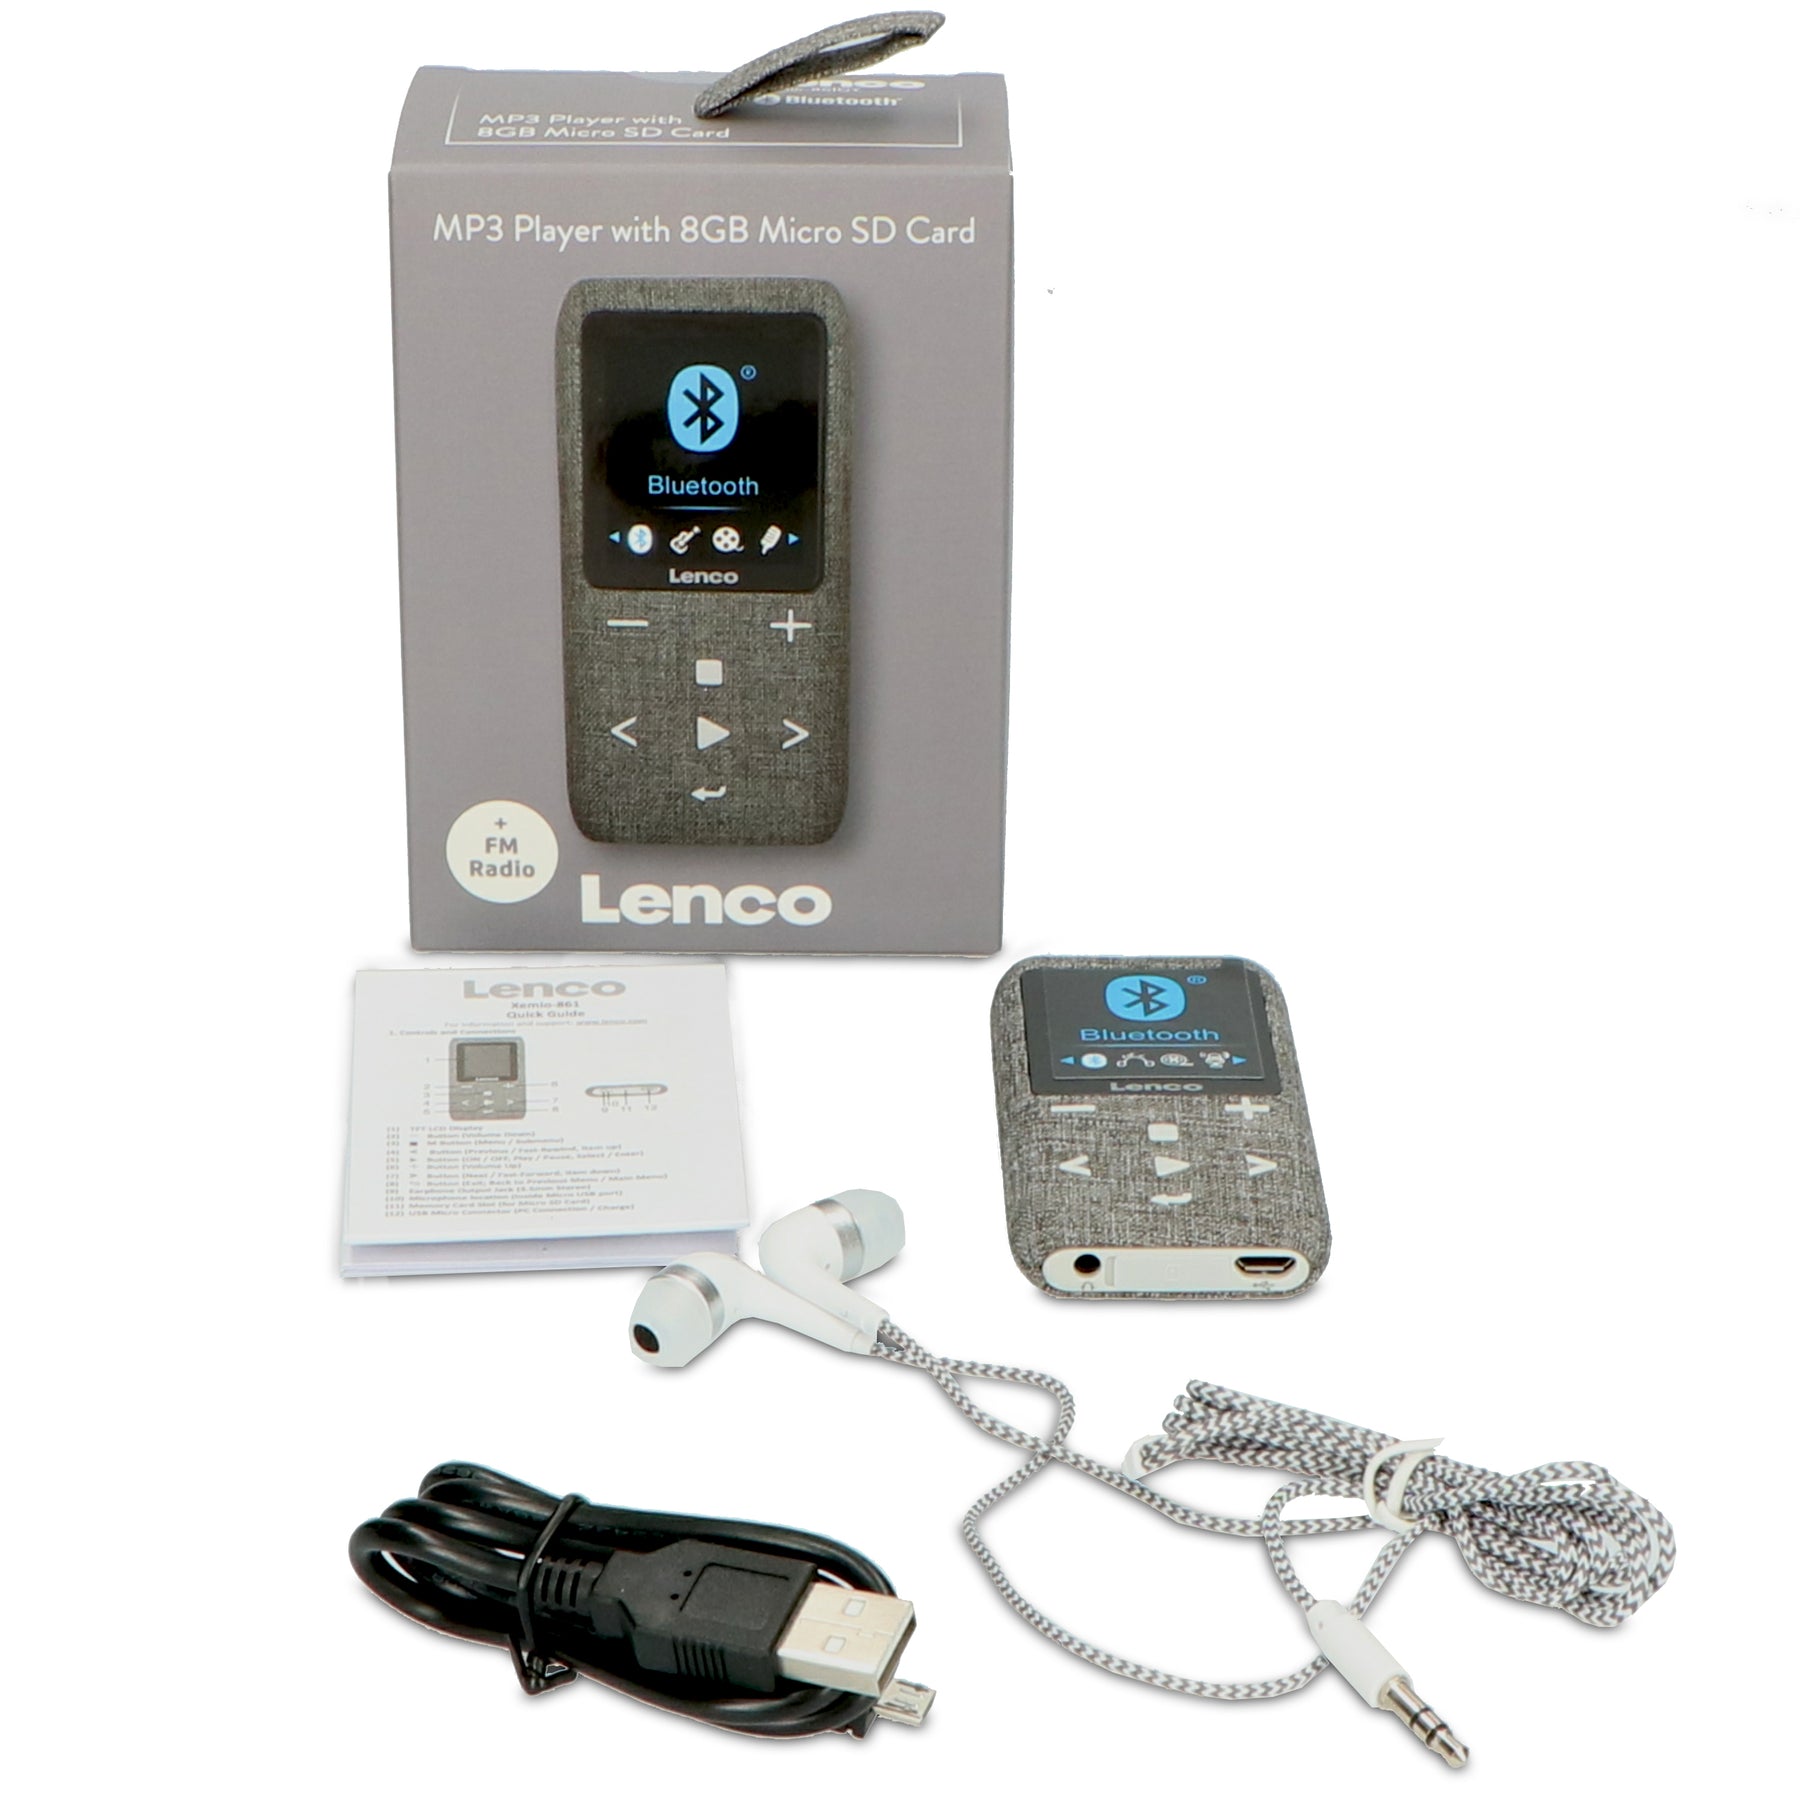 LENCO Xemio-861GY - MP3/MP4 Player with - – Card Bluetooth® Micro SD Lenco-Catalog 8GB